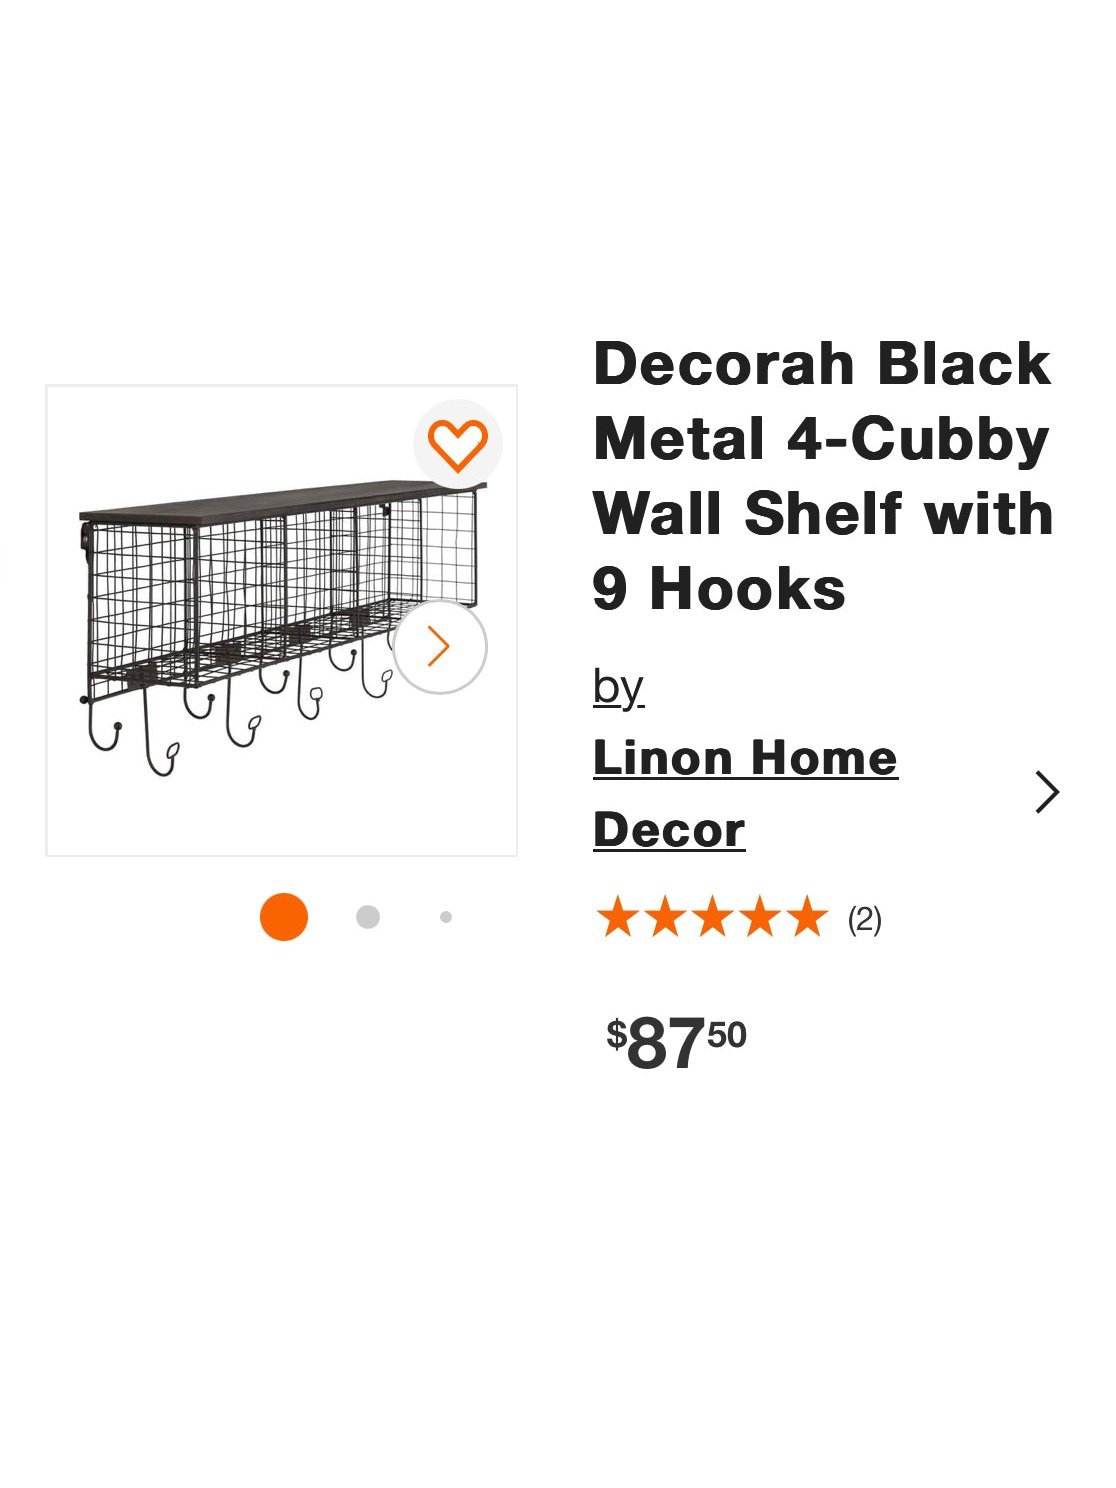 Decorah Black Metal 4-Cubby Wall Shelf with 9 Hooks